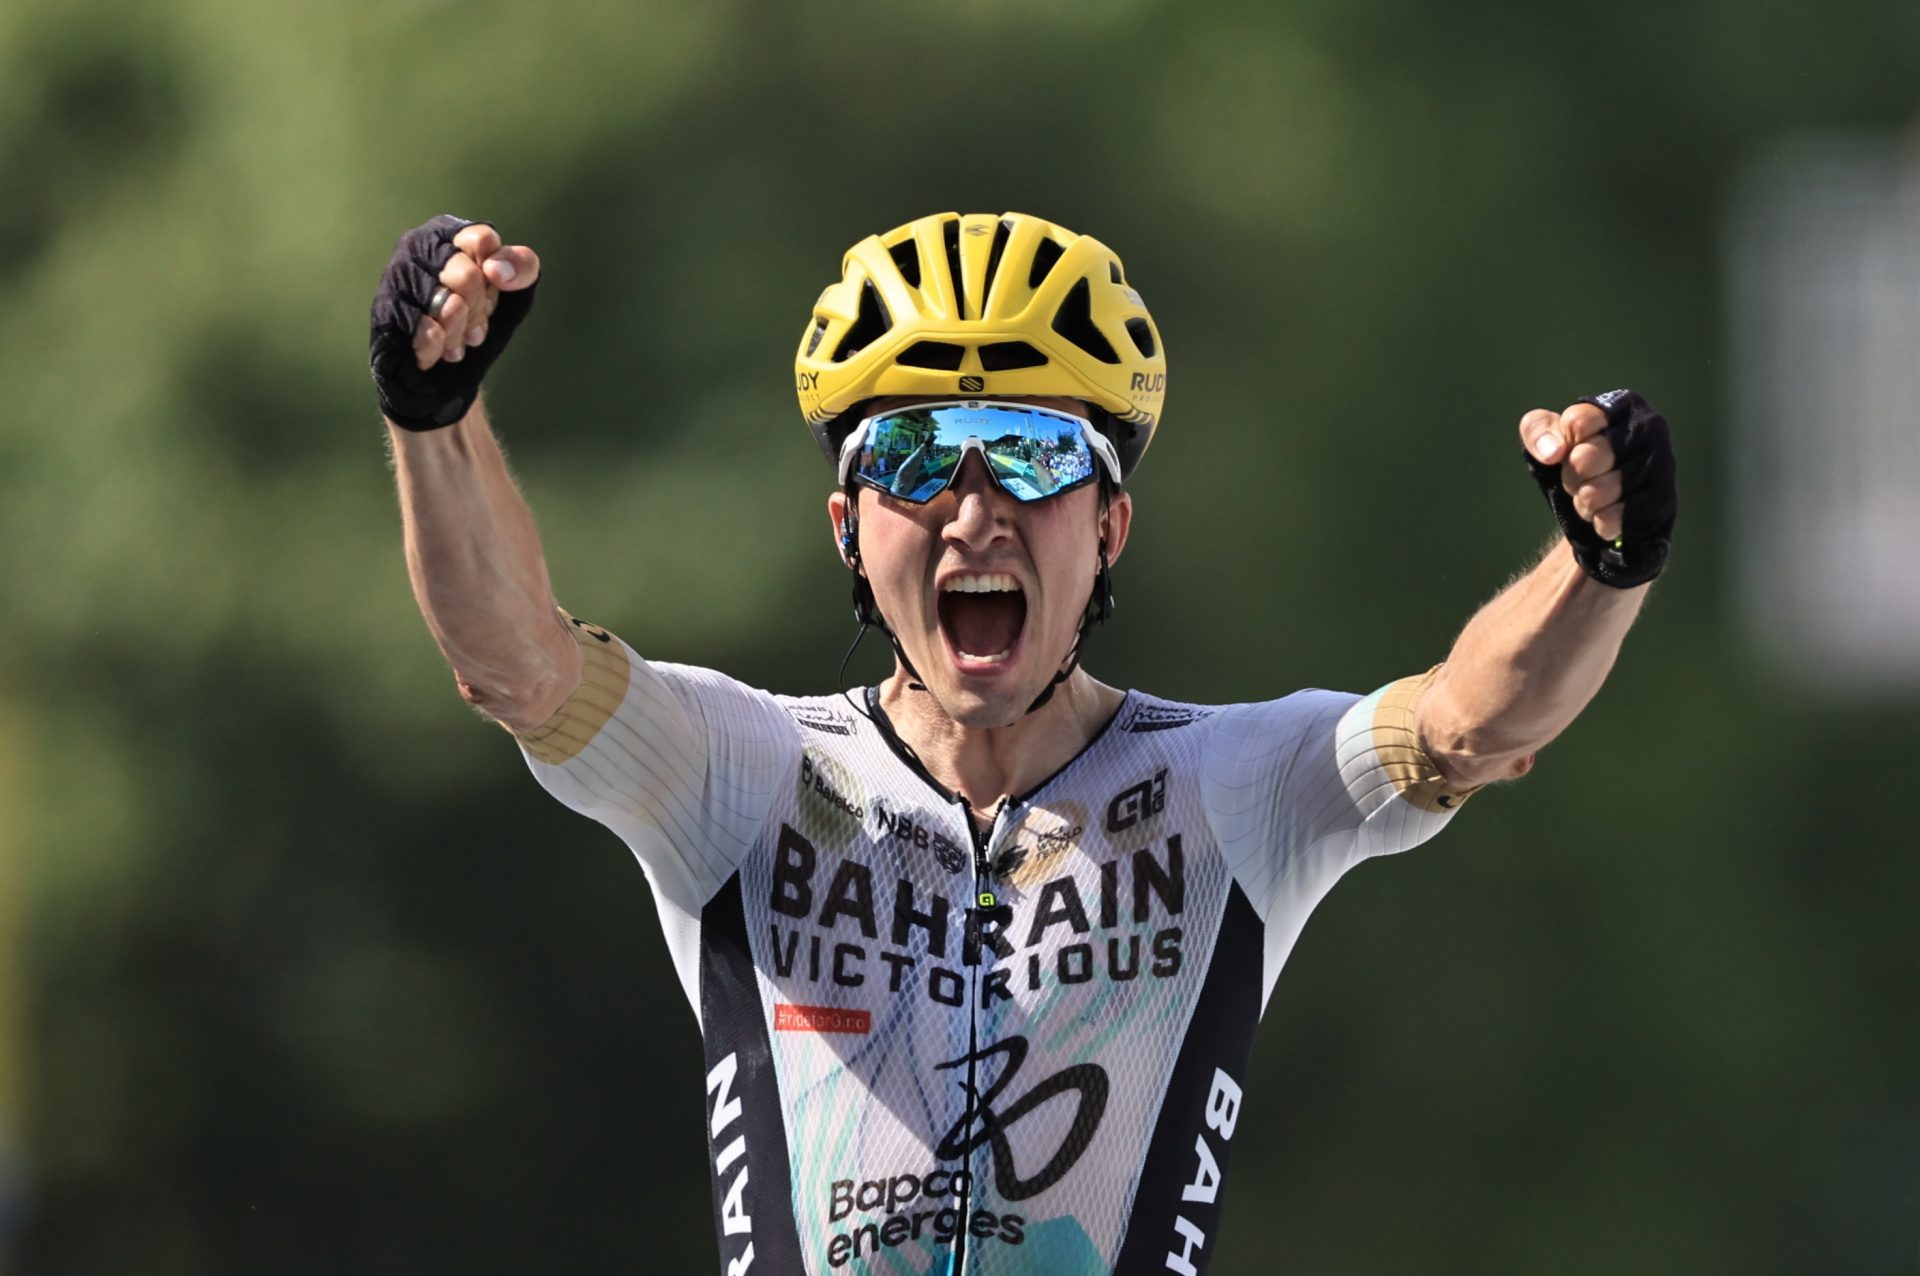 Pello Bilbao gana la etapa del Tour. EFE/Christophe Petit Tesson